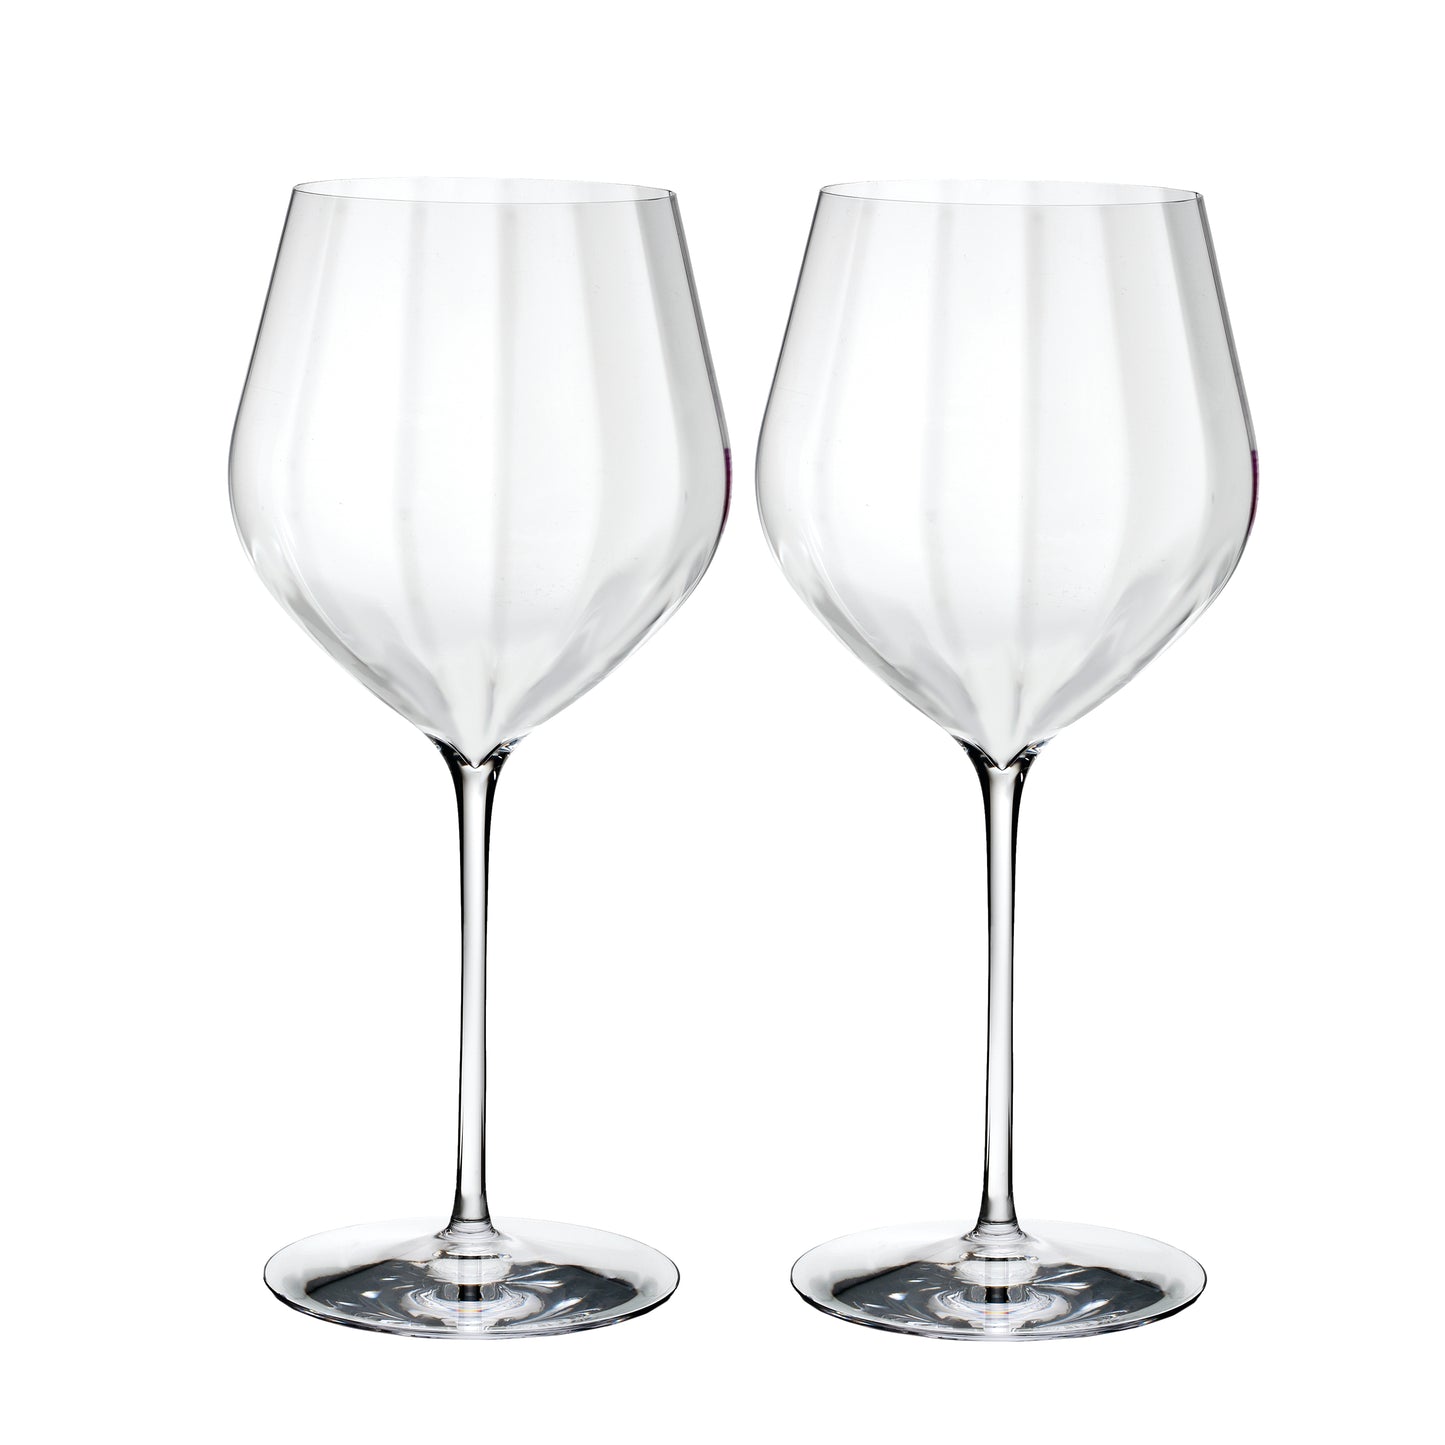 Waterford Elegance Optic Big Red Wine Glass, Set of 2